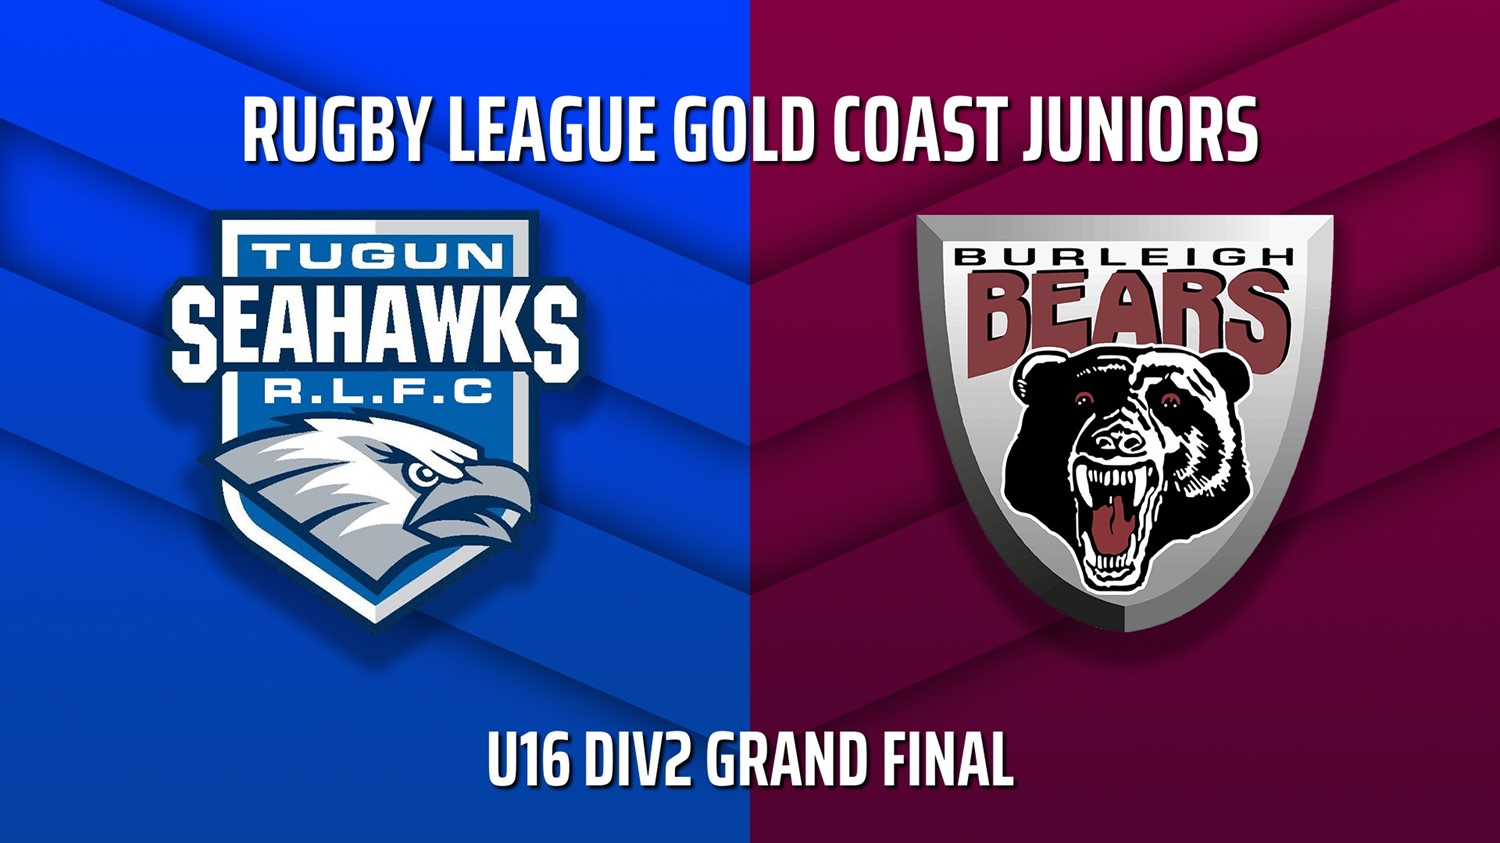 220903-Rugby League Gold Coast Juniors U16 Div2 Grand Final  - Tugun Seahawks v Burleigh Bears Juniors Slate Image